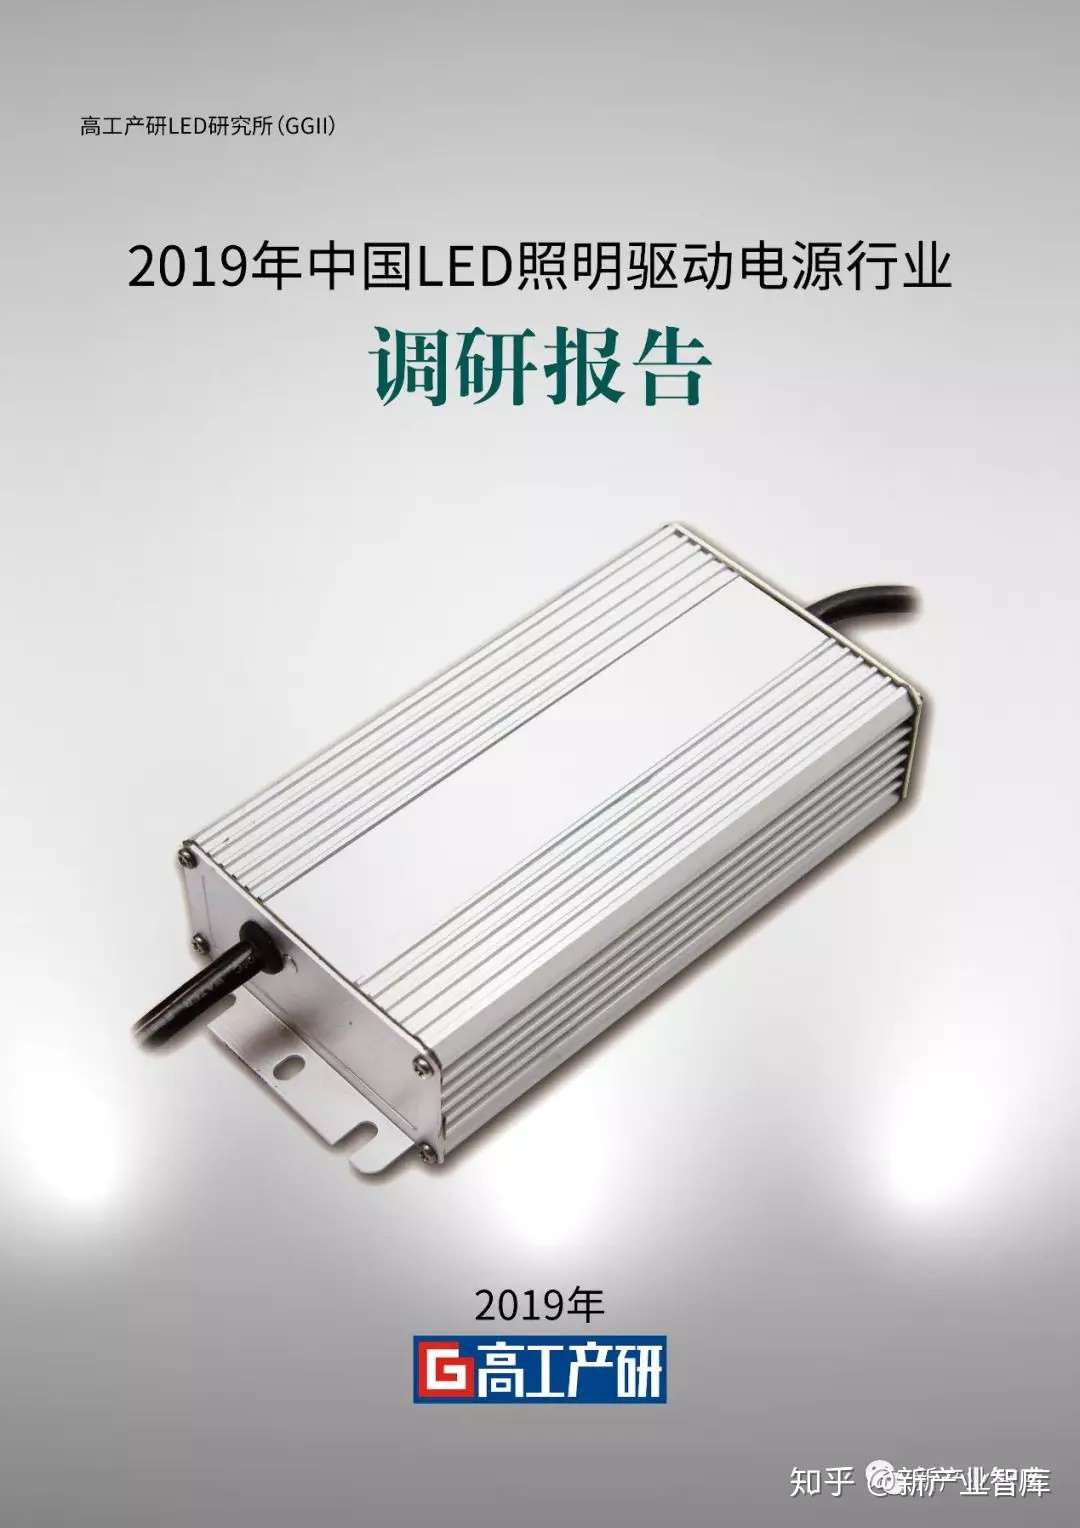 Ggii 2019年中国led照明驱动电源行业调研报告 知乎